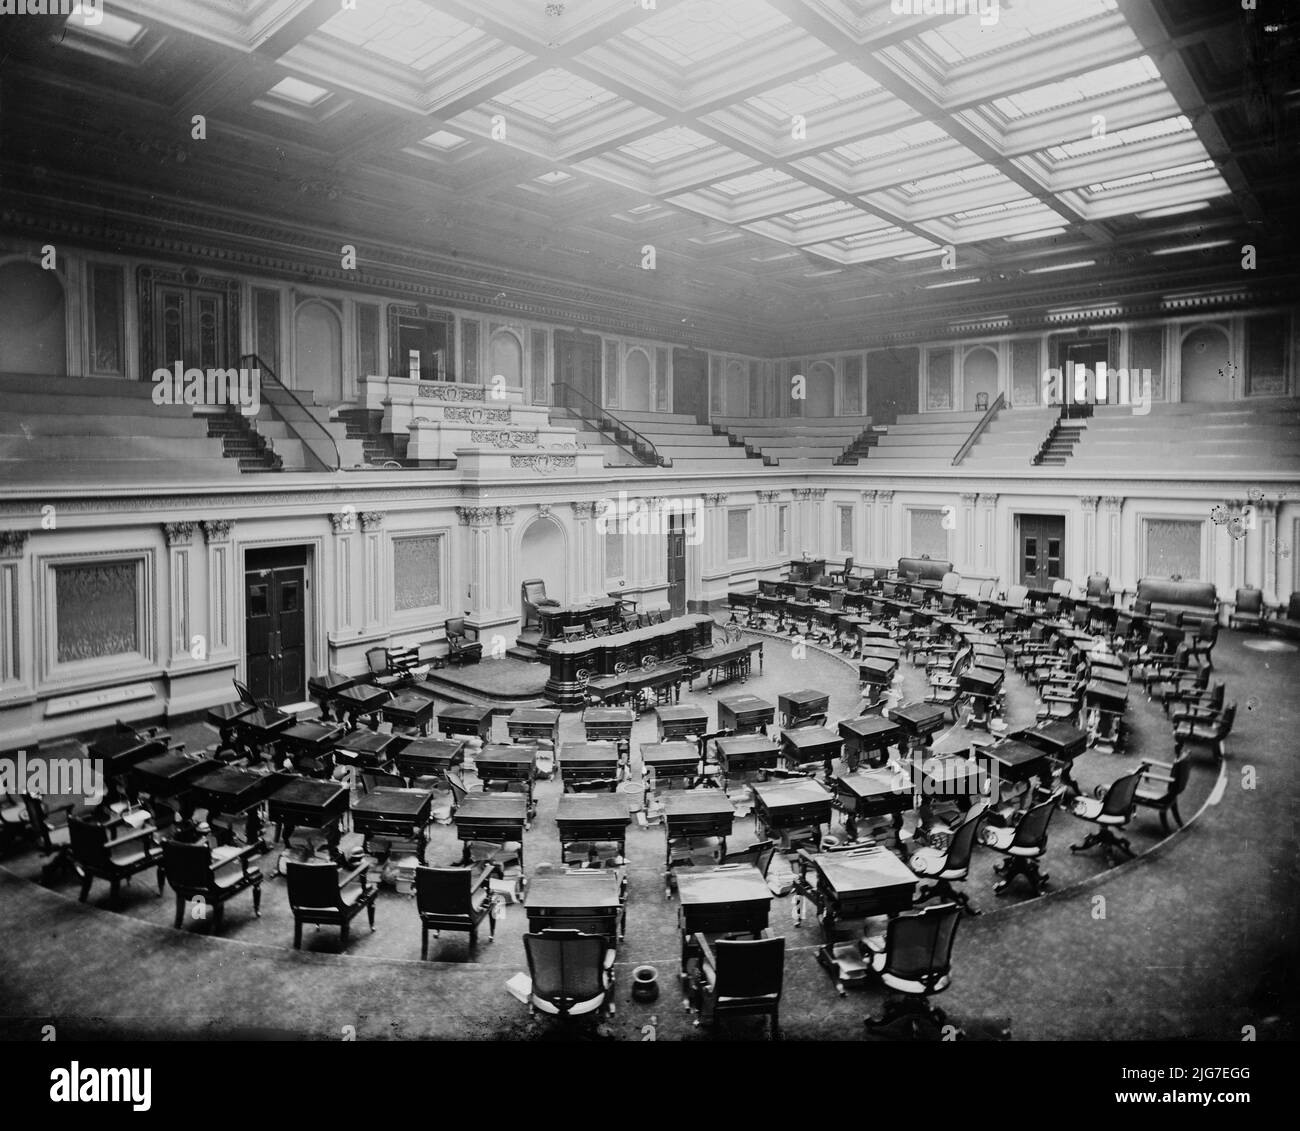 U.S. Capitol - Seventh i.e, SenateChamber, c. 1873, between 1860 and 1880. Stock Photo